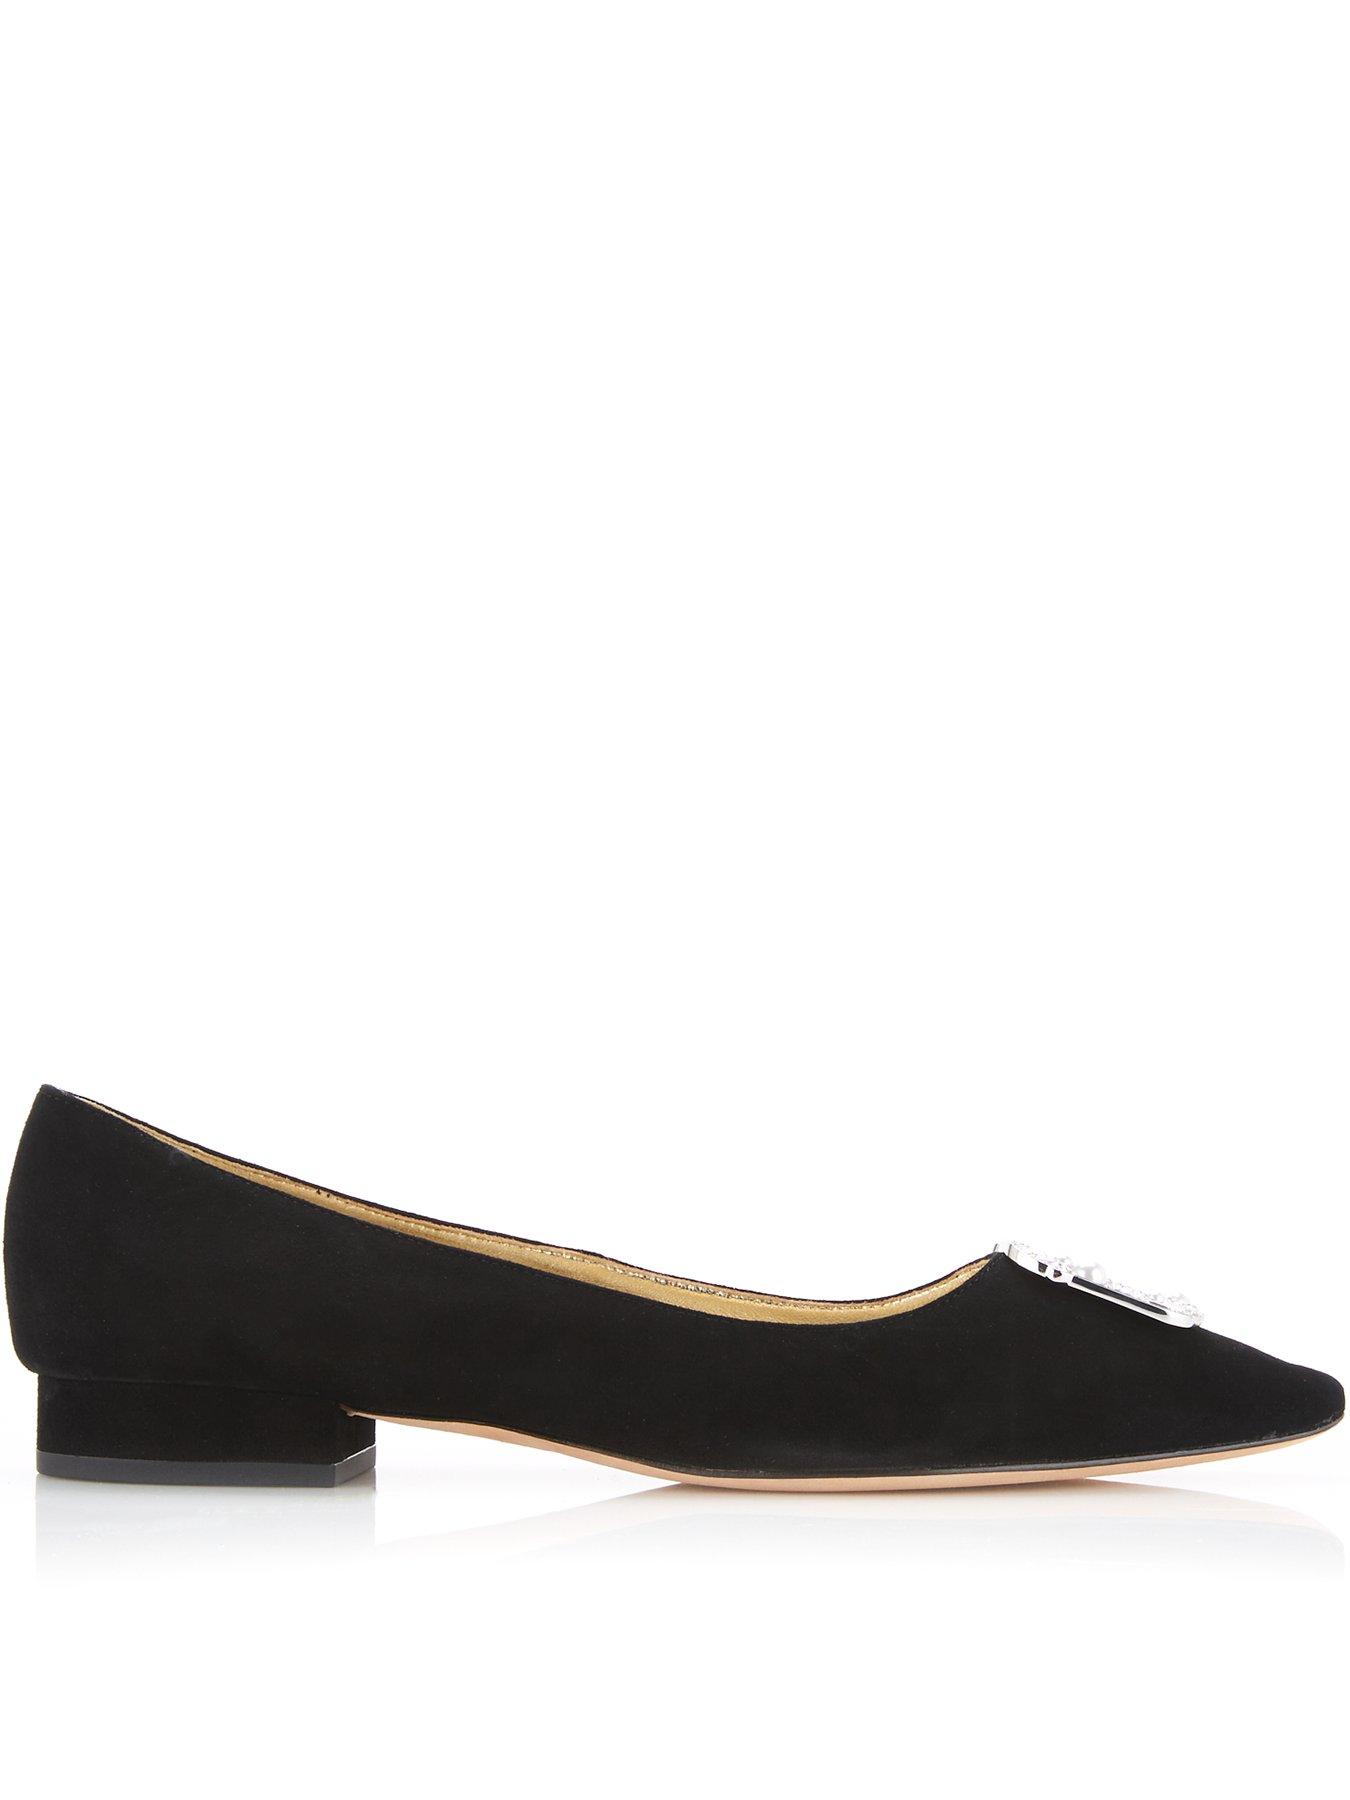 Kate Spade New York Buckle Detail Flat Ballet Shoes - Black 